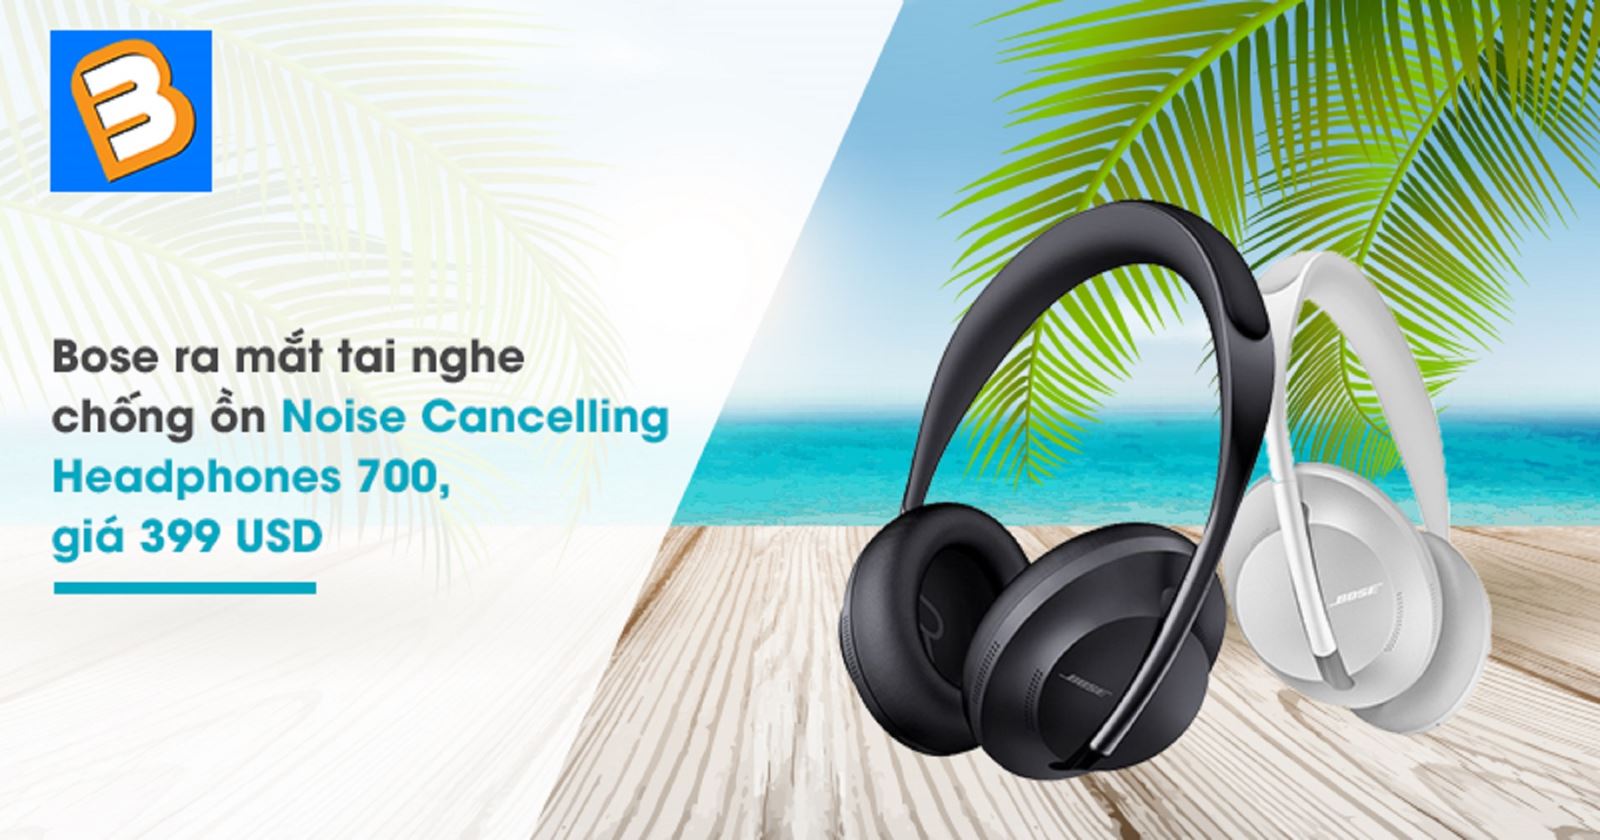 Bose ra mắt tai nghe chống ồn Noise Cancelling Headphones 700, giá 399 USD